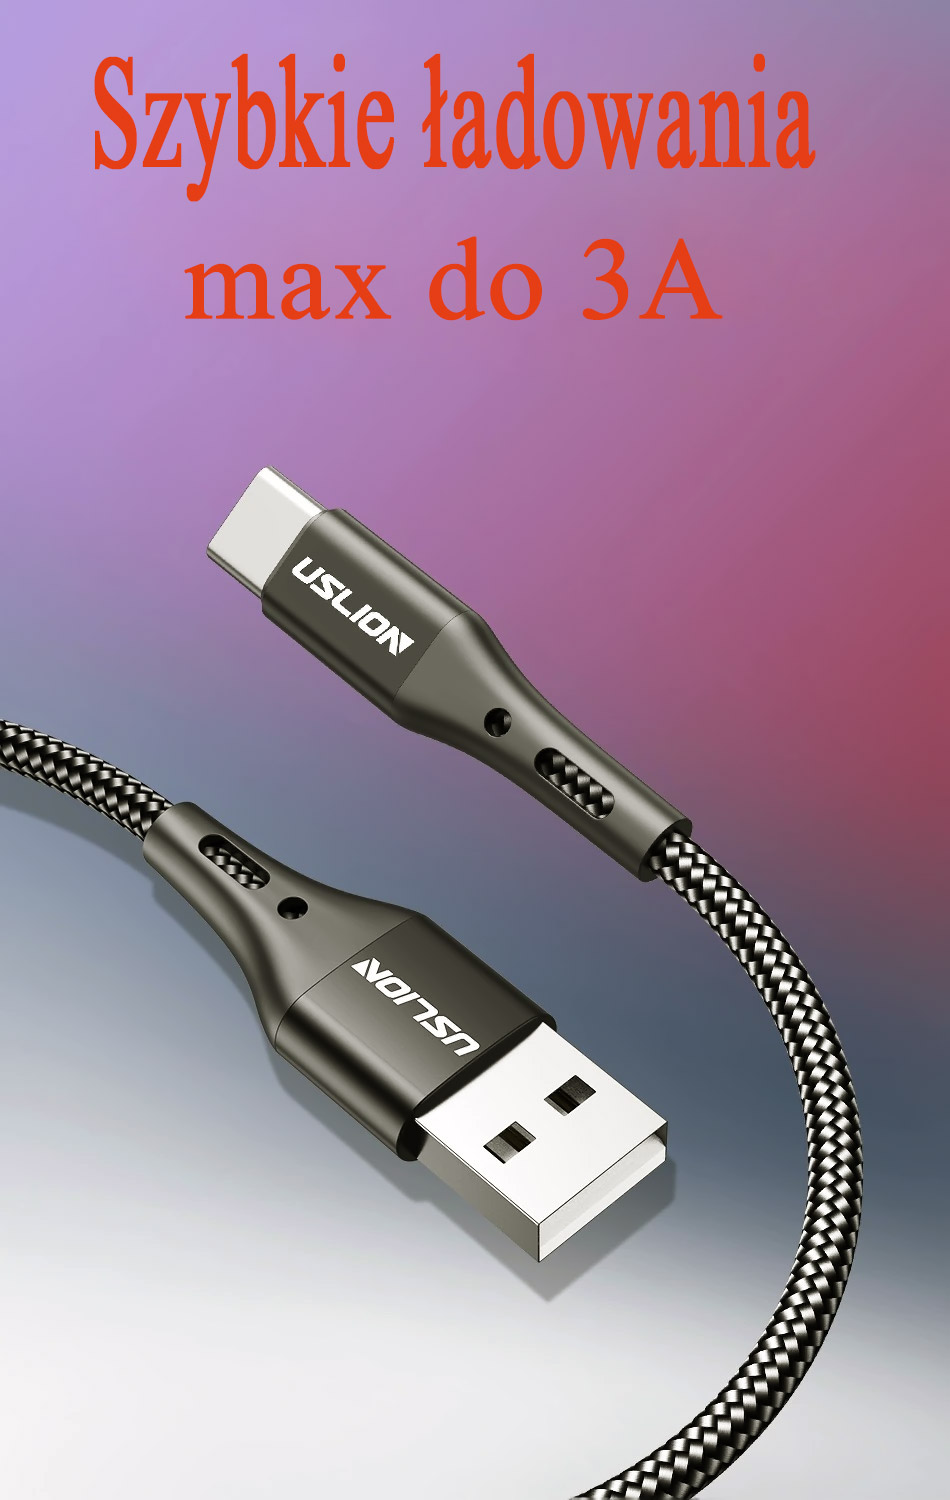 Kable USB szybkiego adowania